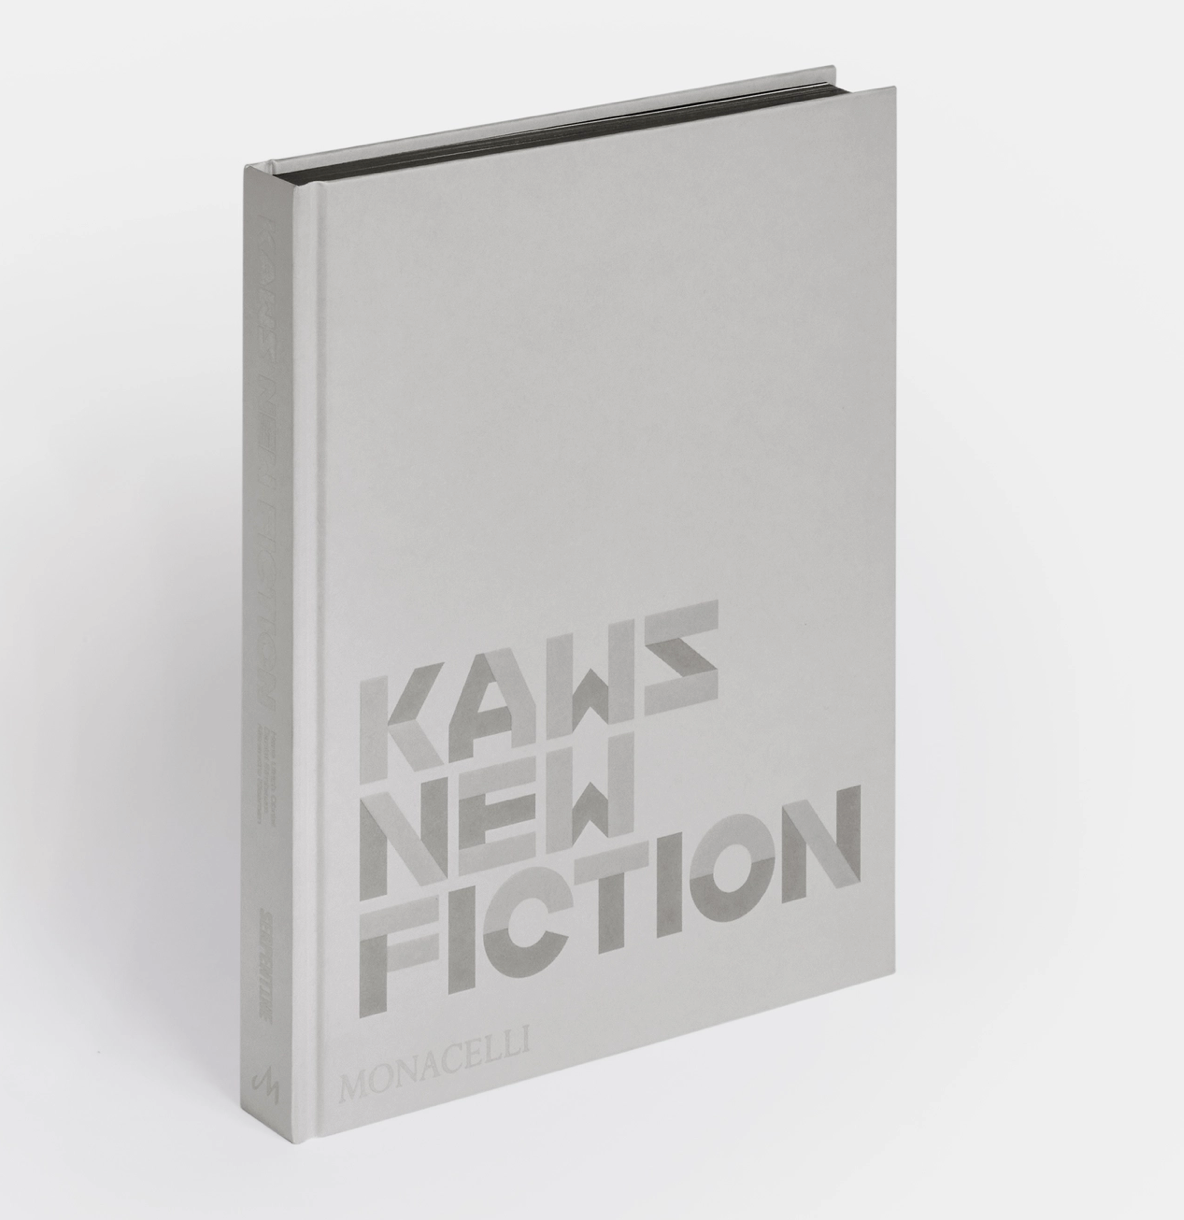 KAWS New Fiction